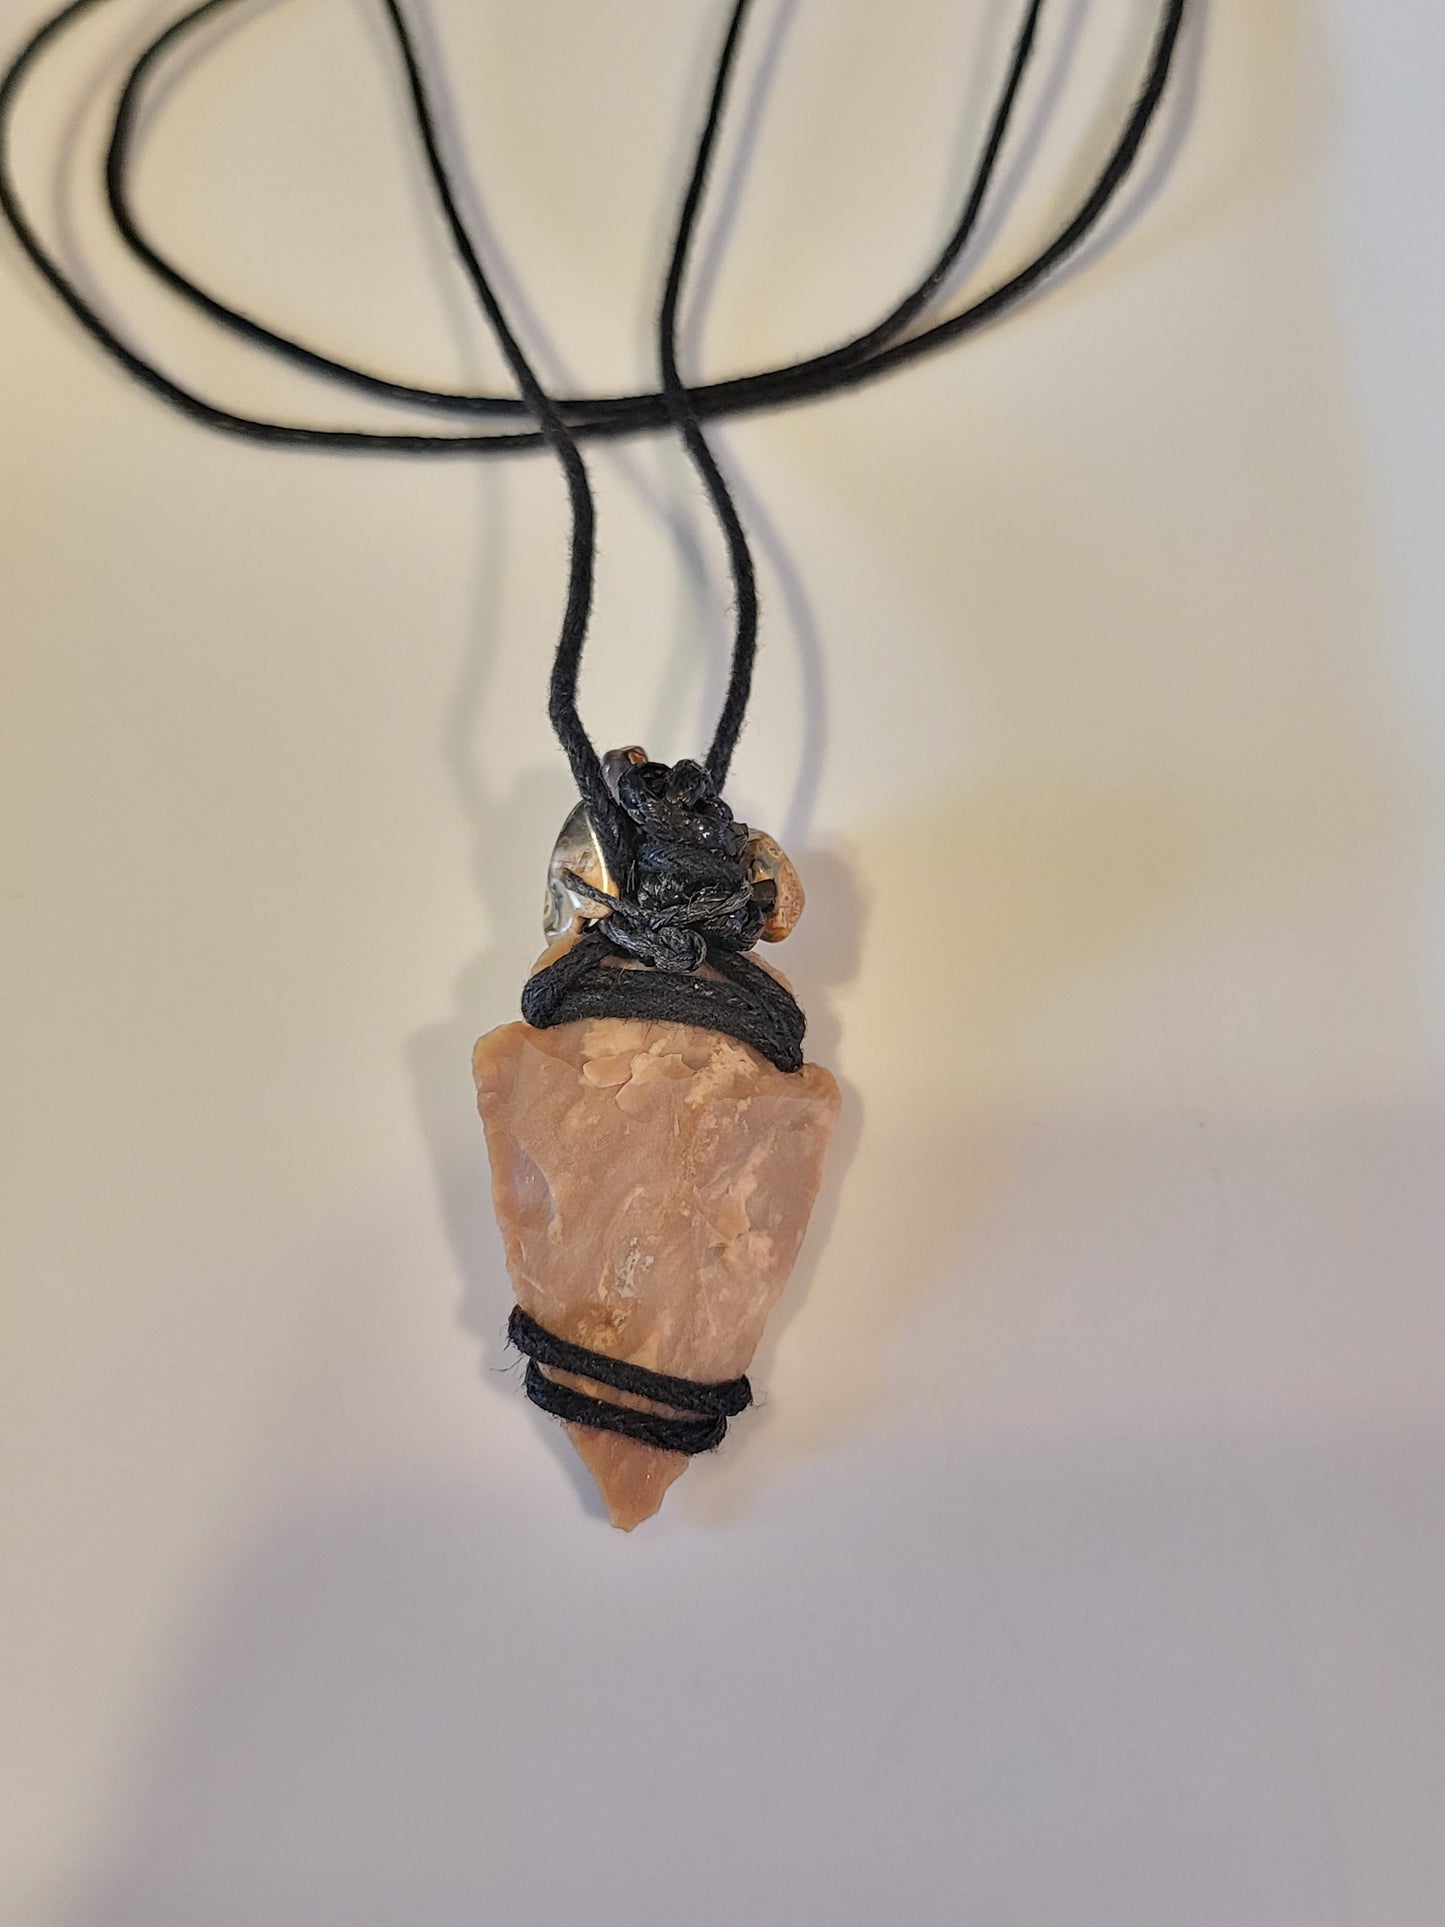 Men's Arrowhead Stone Necklace on cord